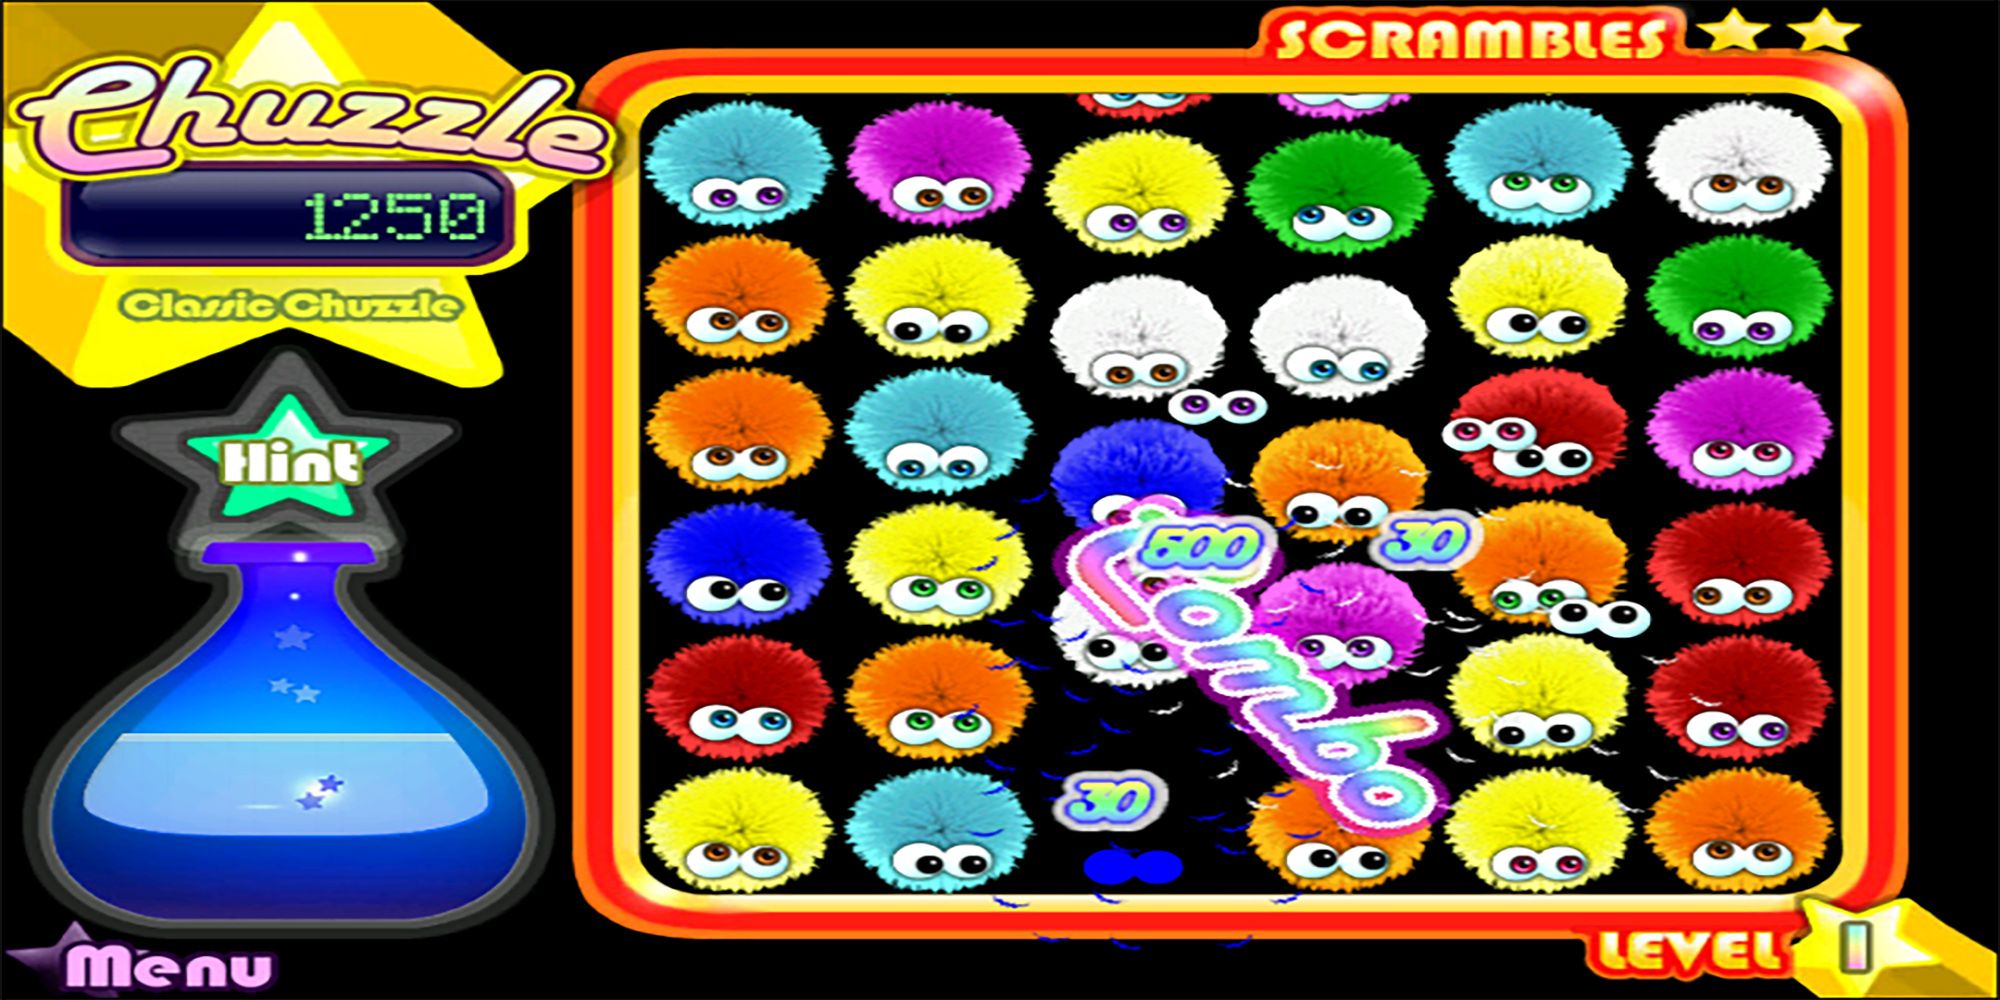 Colorful fuzzballs pop across the screen in Chuzzle for PC.